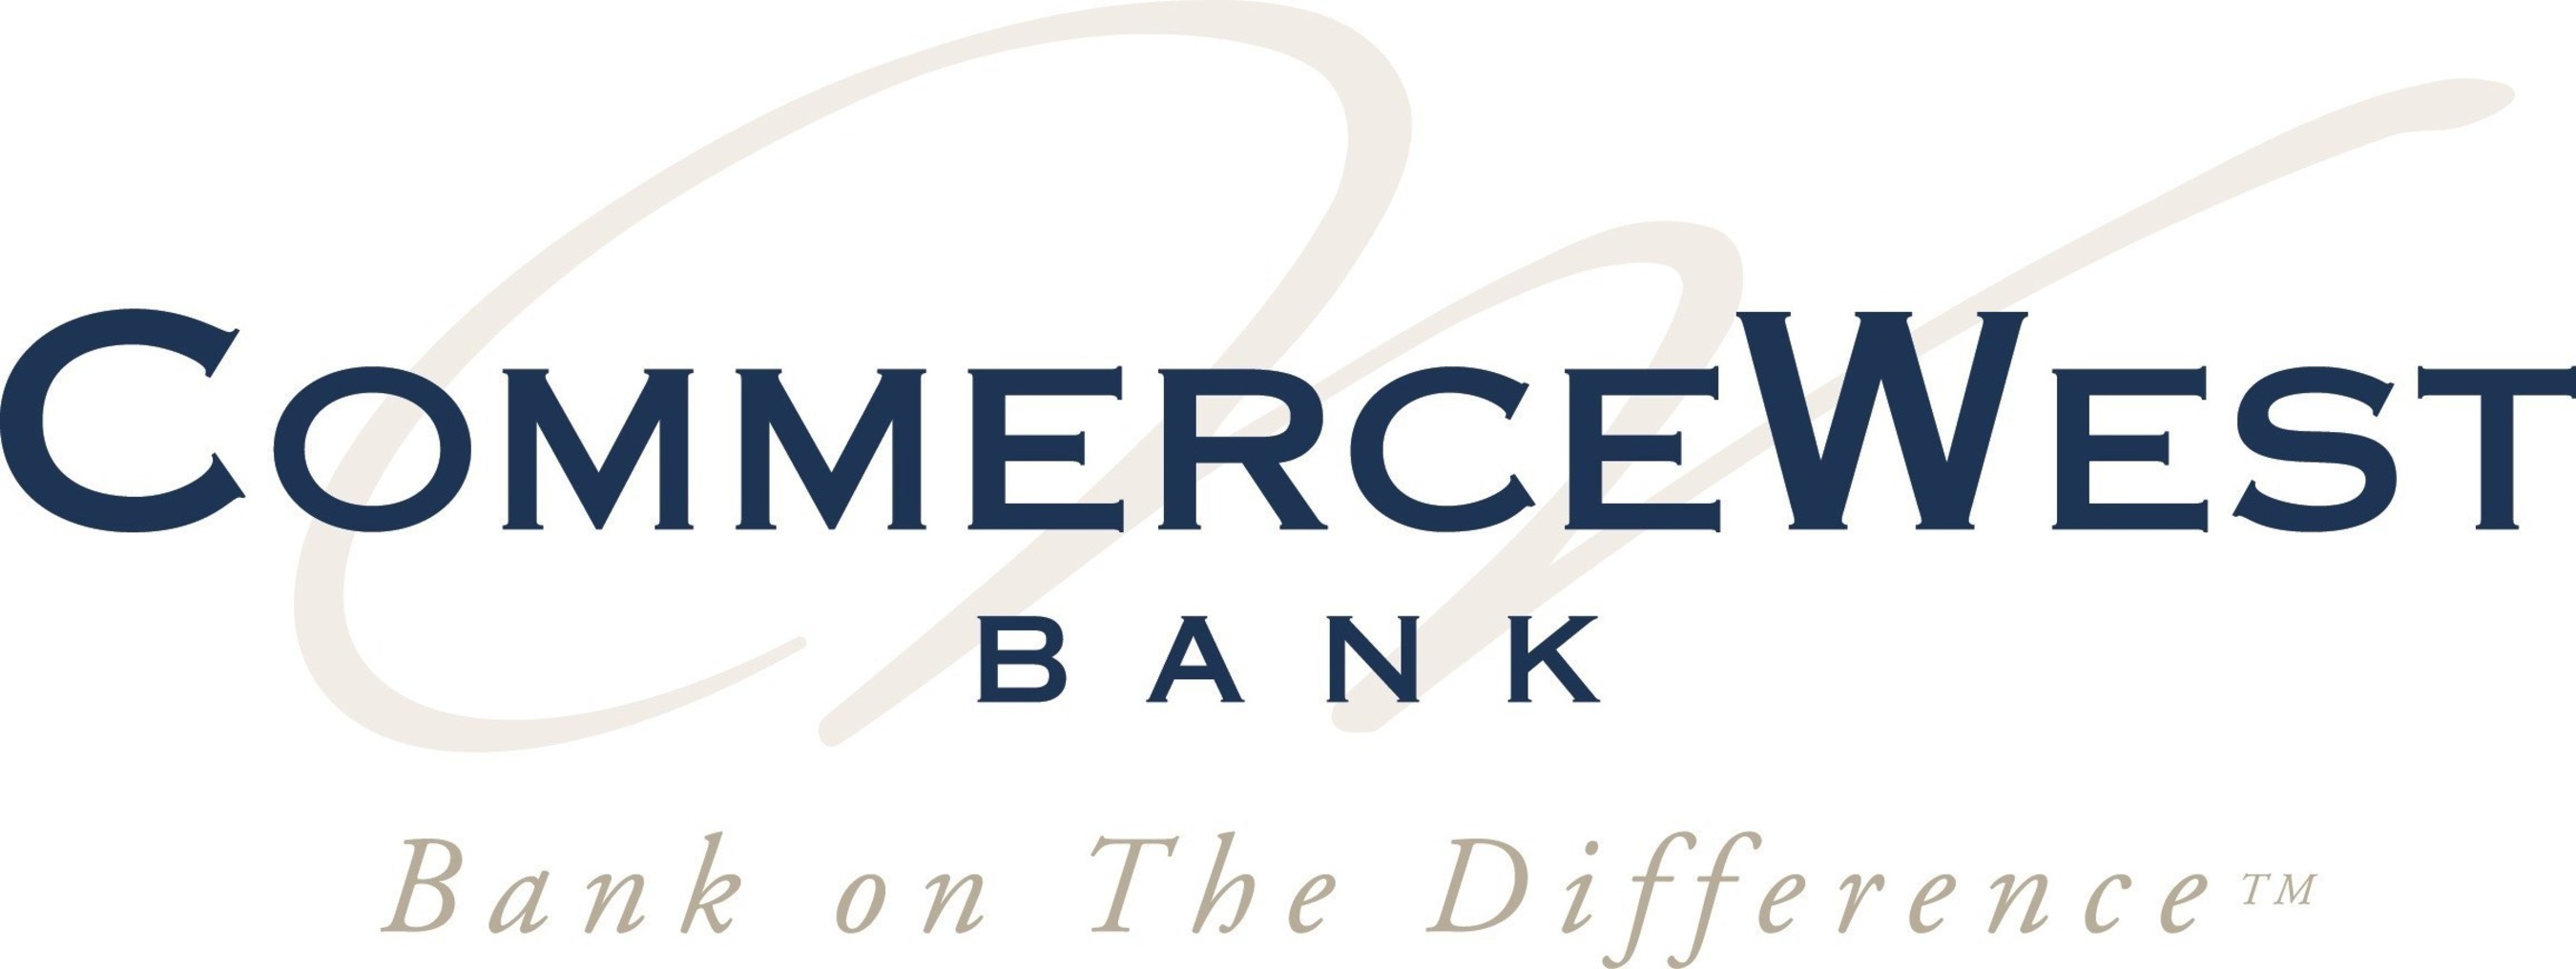 CommerceWest Bank Logo (PRNewsFoto/CommerceWest Bank)